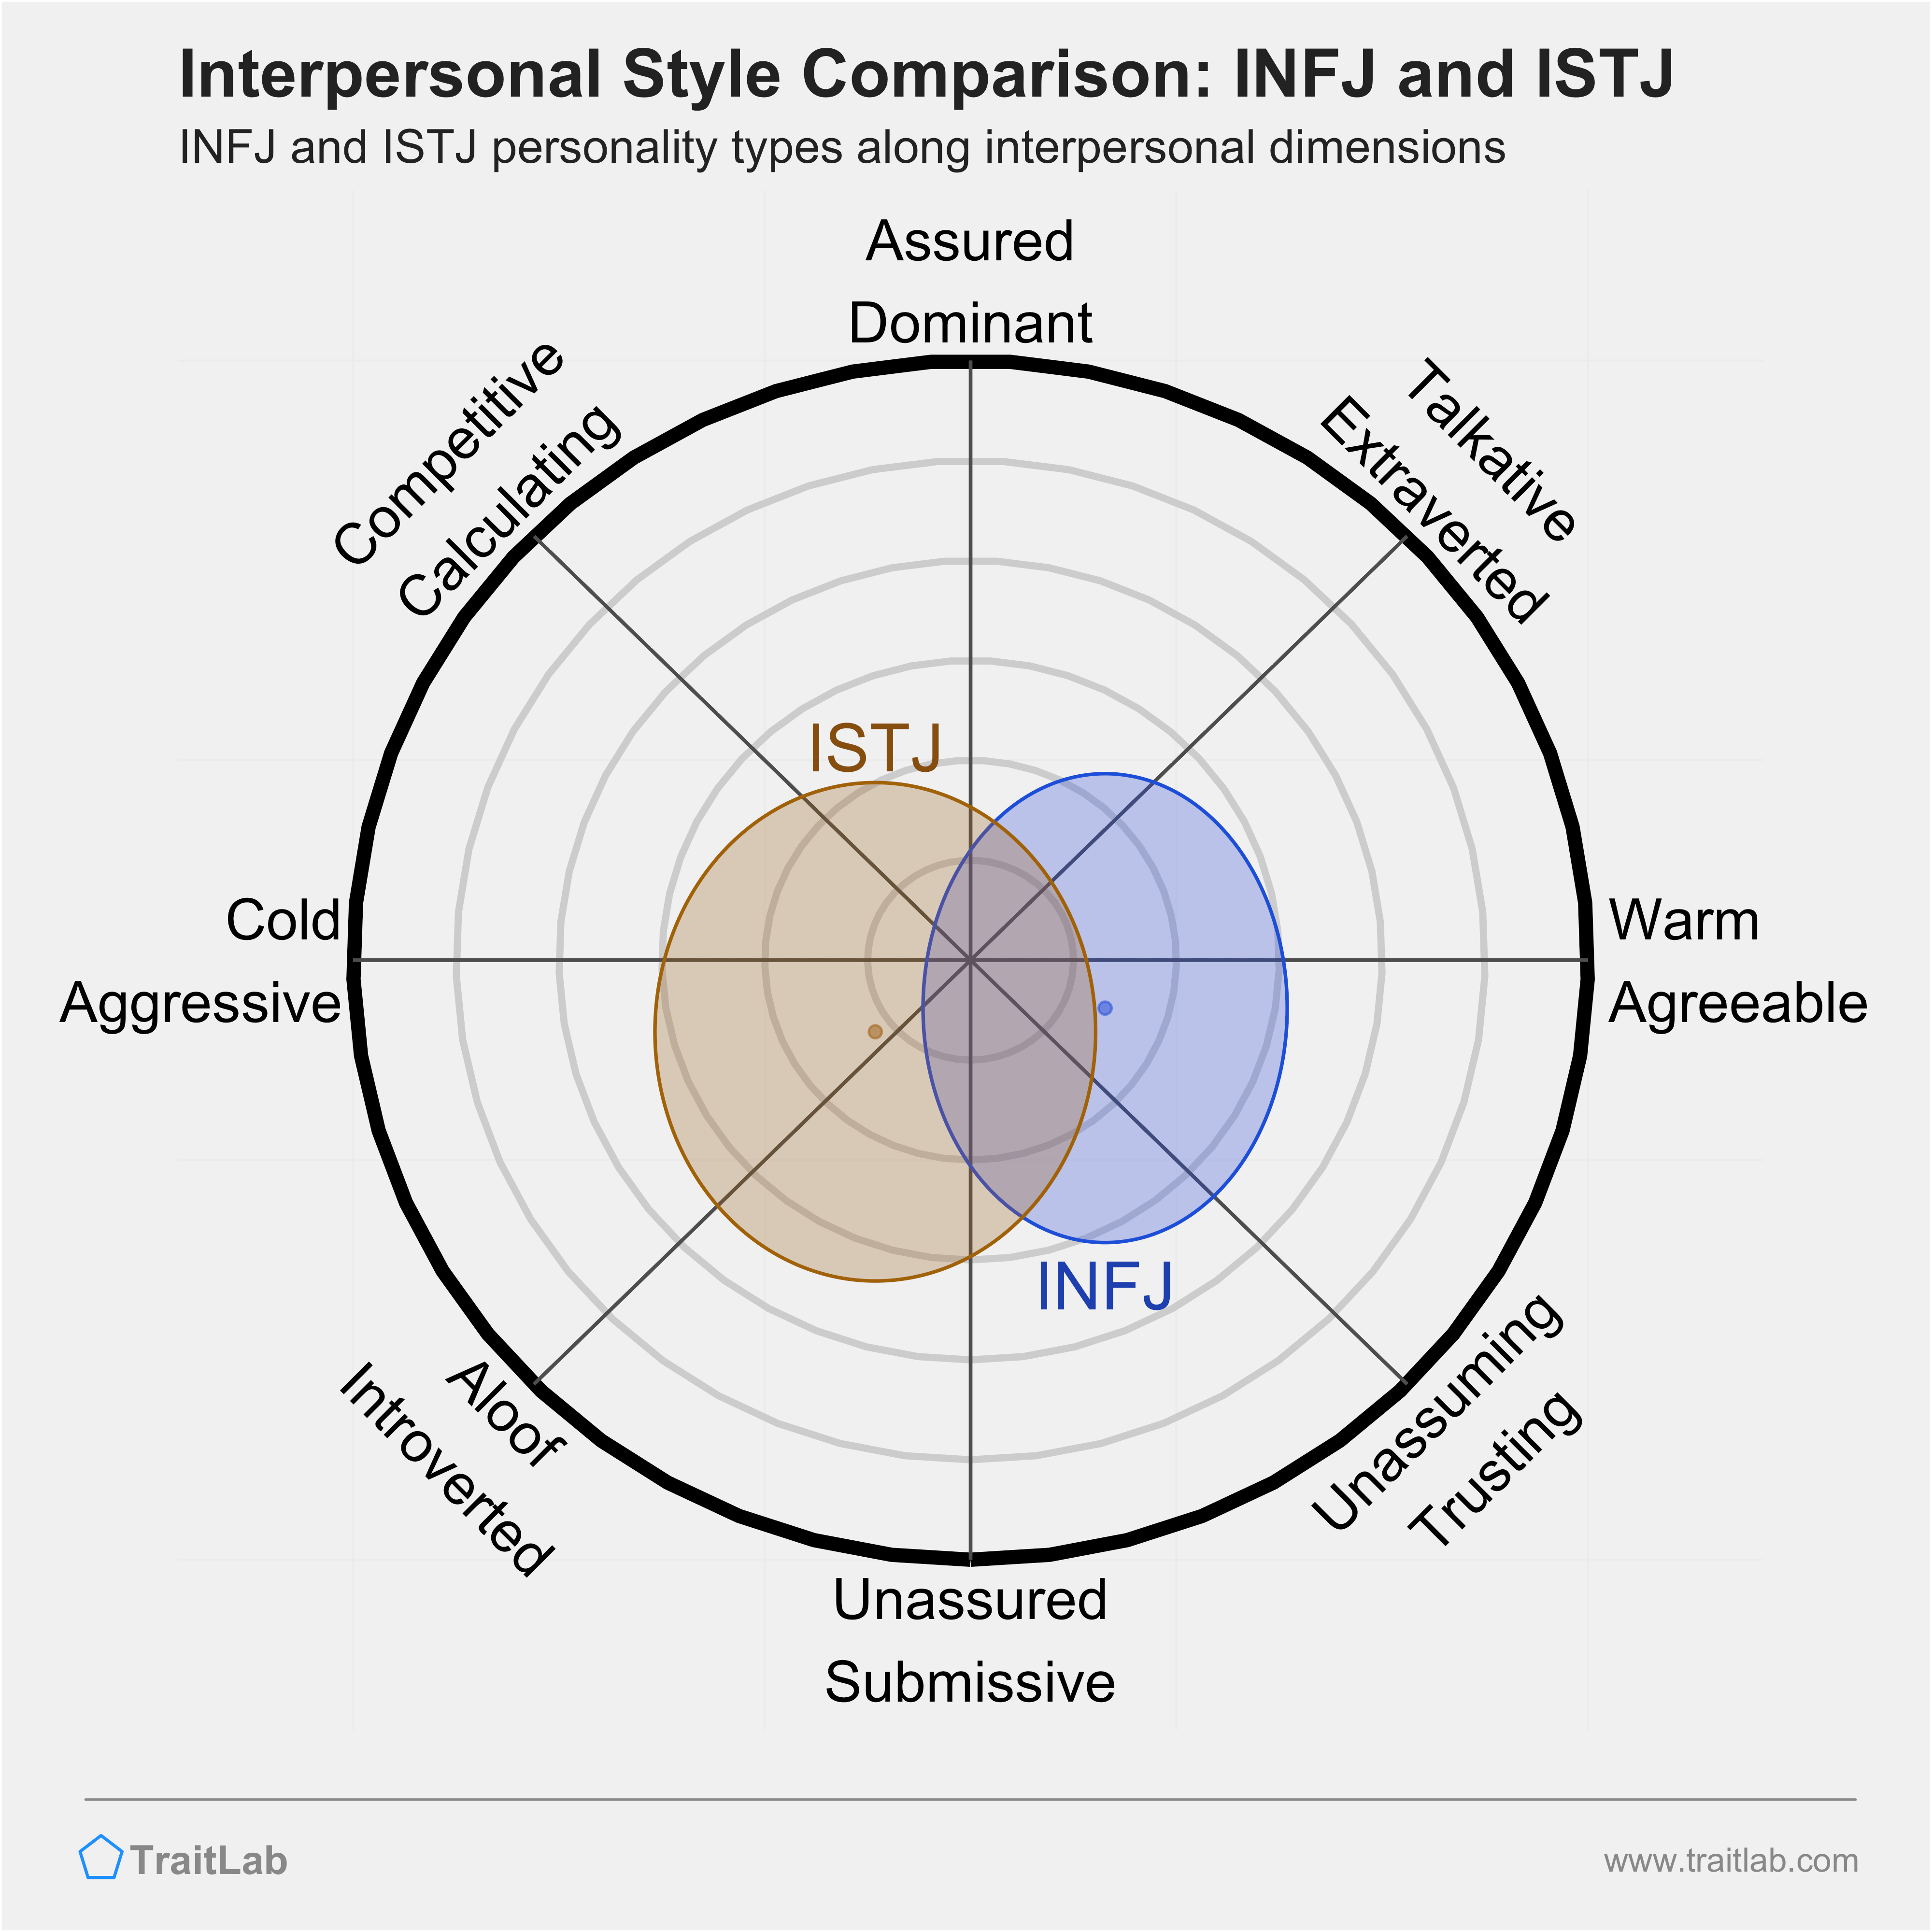 INFJ and ISTJ comparison across interpersonal dimensions